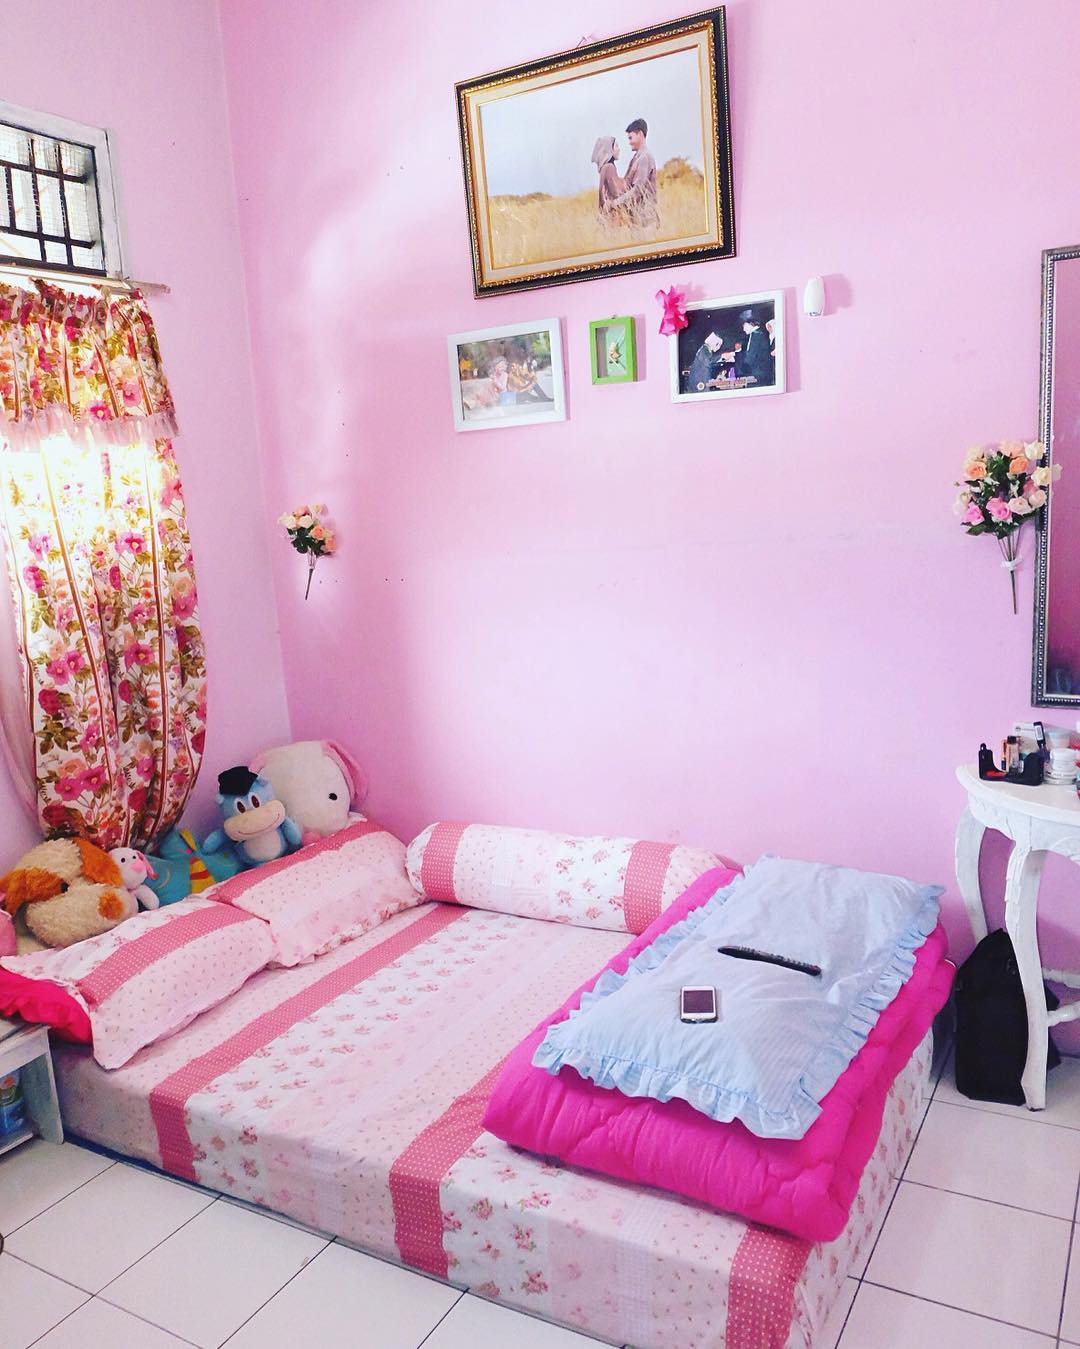 wallpaper dinding kamar tidur romantis,bedroom,bed sheet,furniture,pink,room